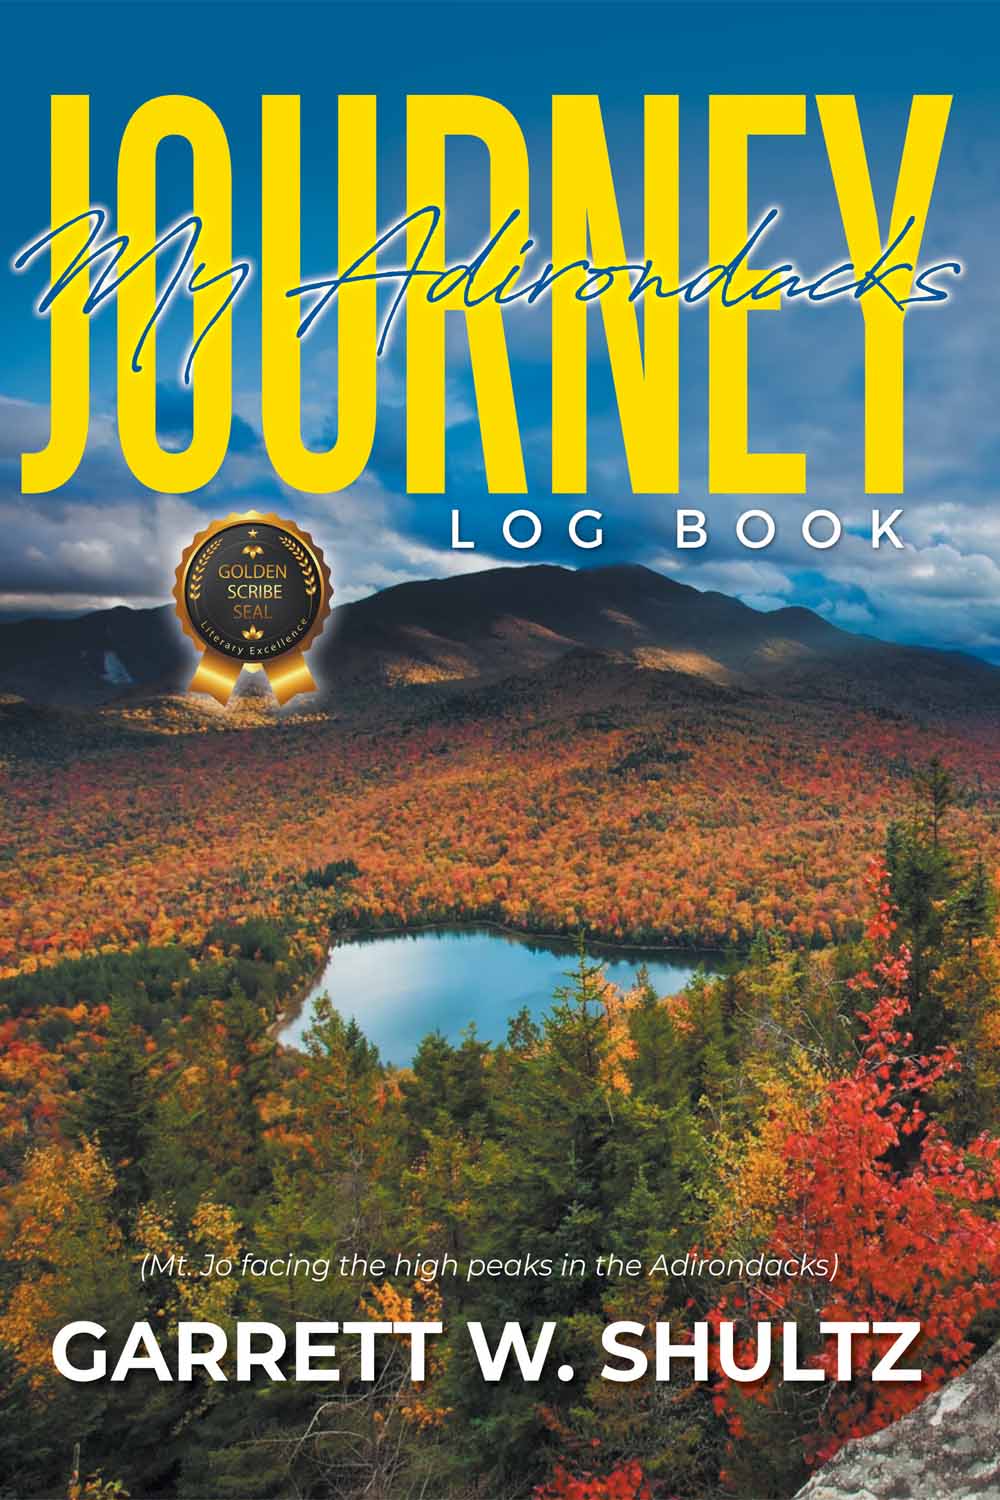 My Adirondacks Journey: Log Book by Garrett Shultz